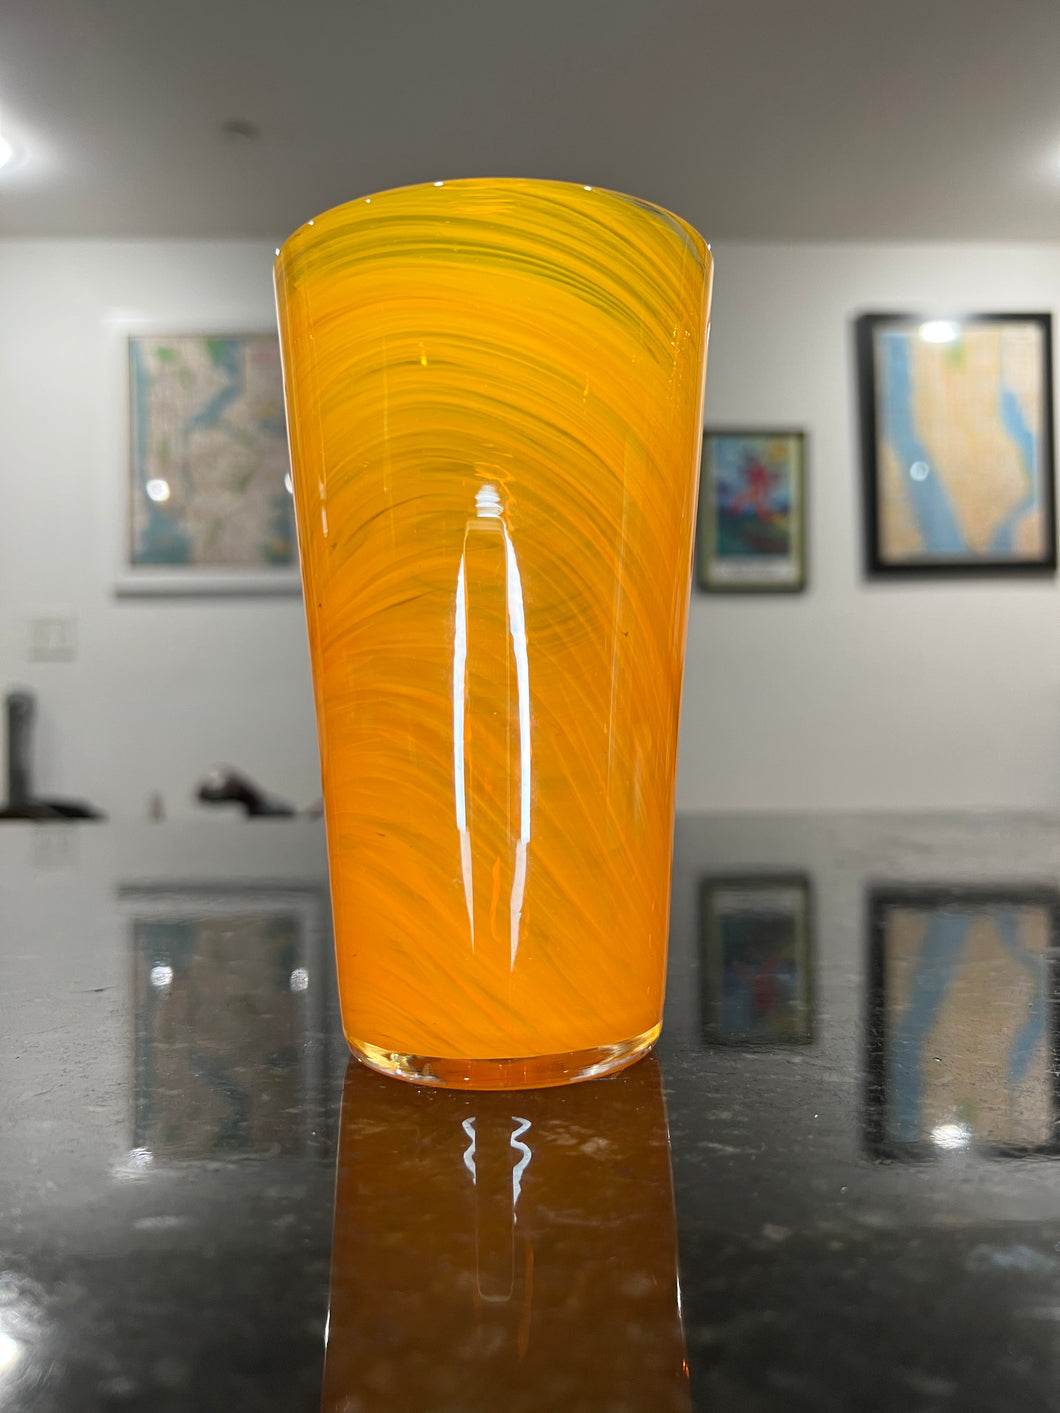 Saffron Pint Glass